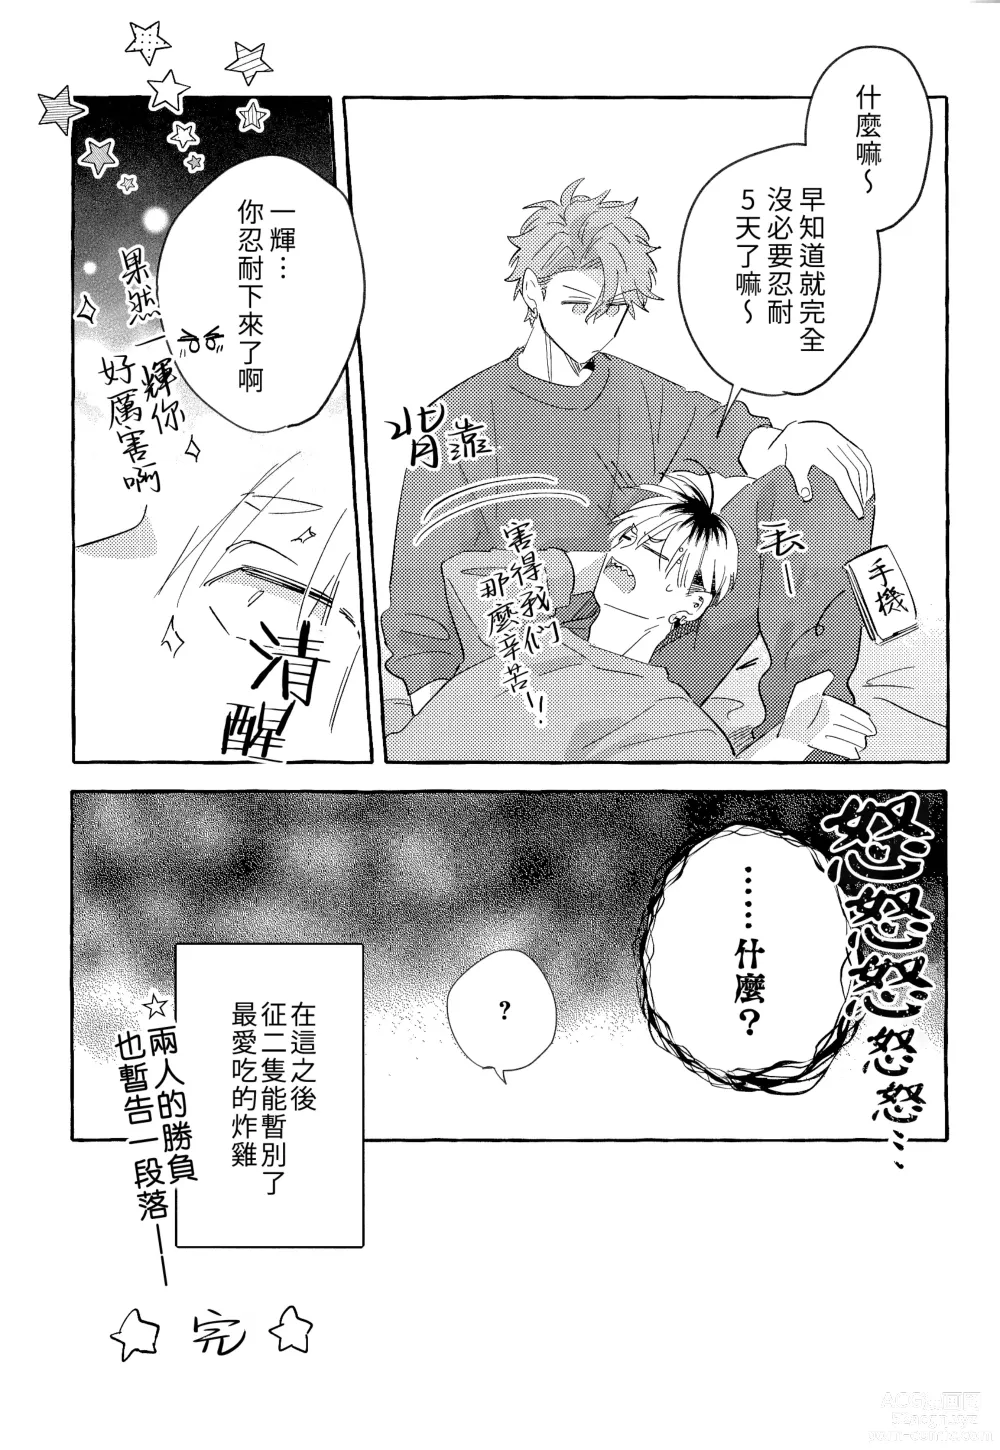 Page 28 of doujinshi skip run!run!run! (uncensored)